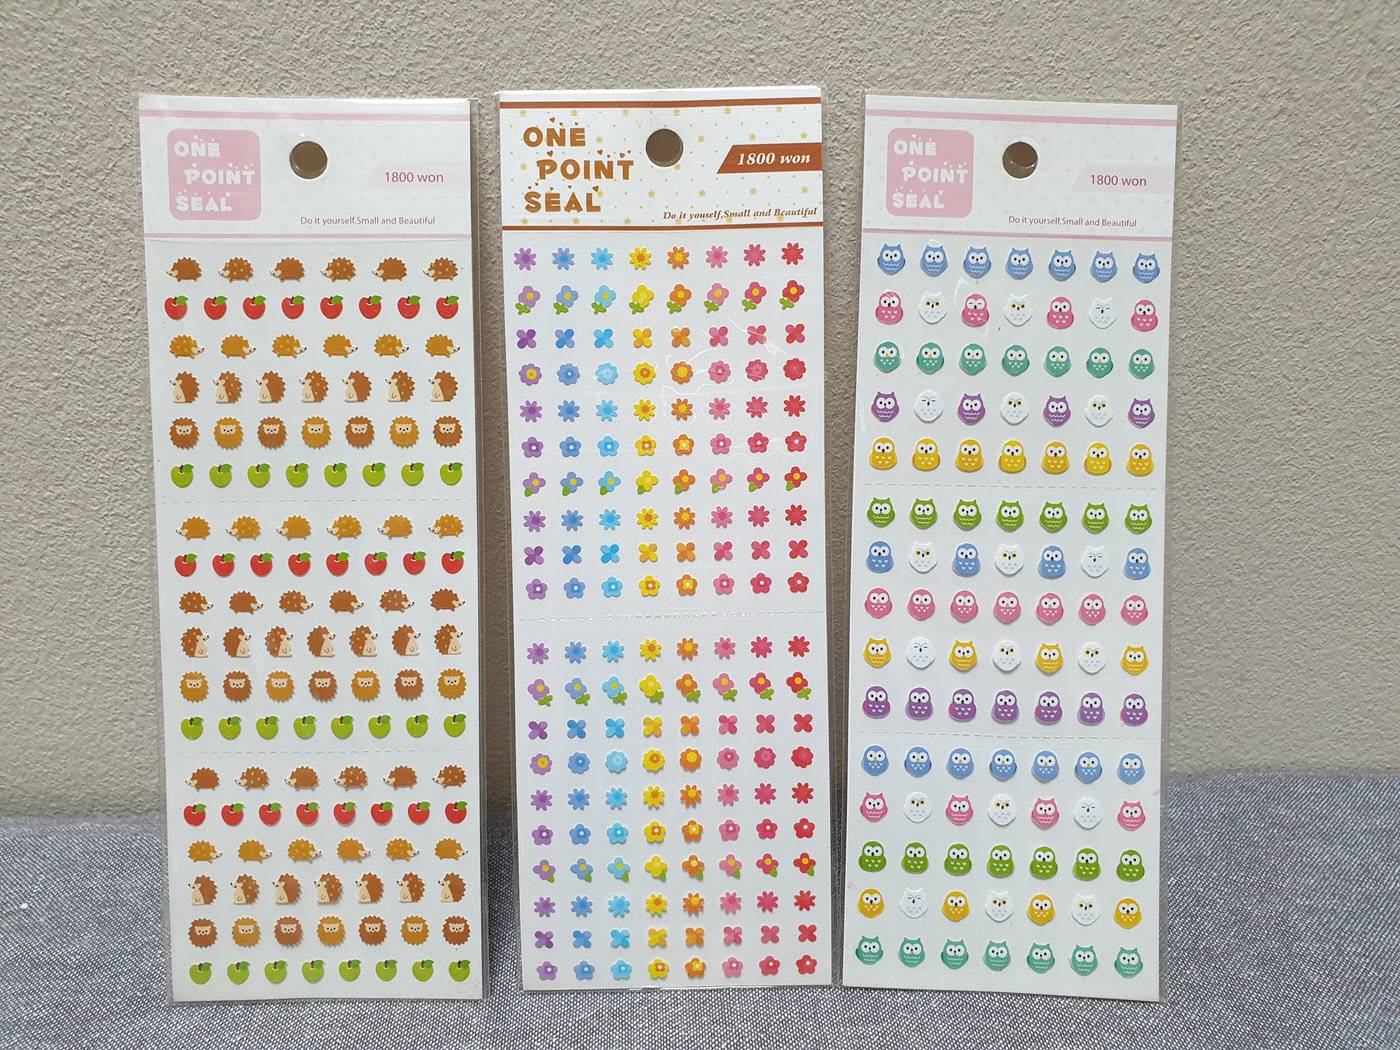 Mini stickers